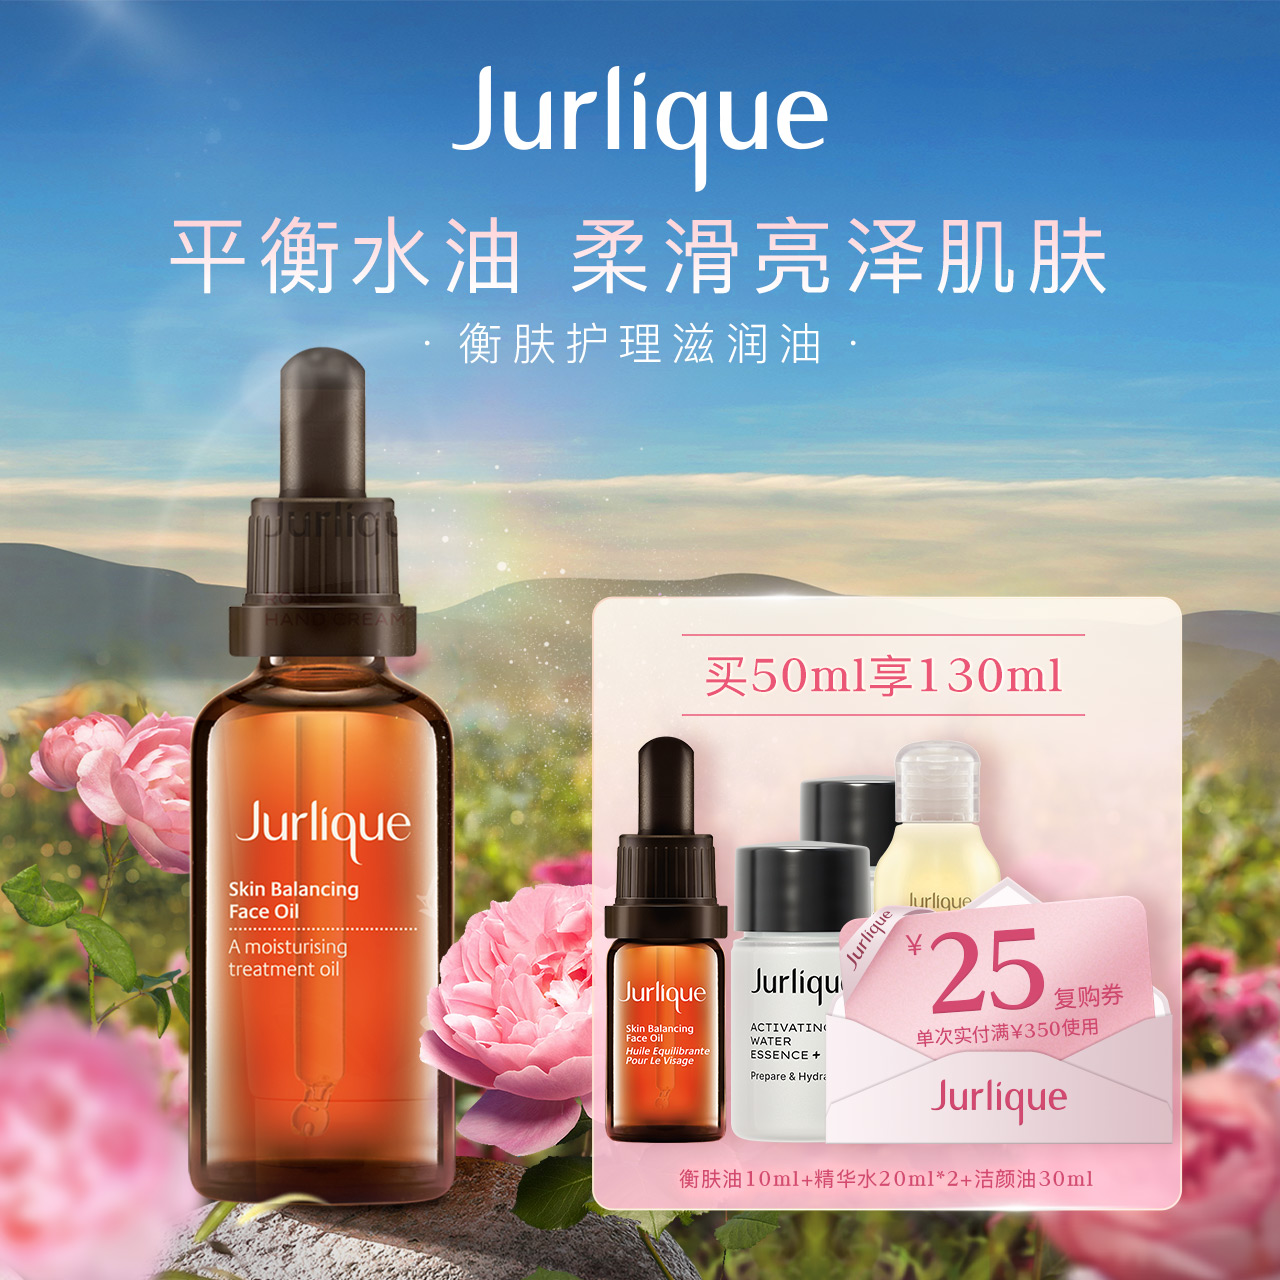 Jurlique 茱莉蔻 衡肤护理滋润油保湿平衡肌肤面部修护精华油